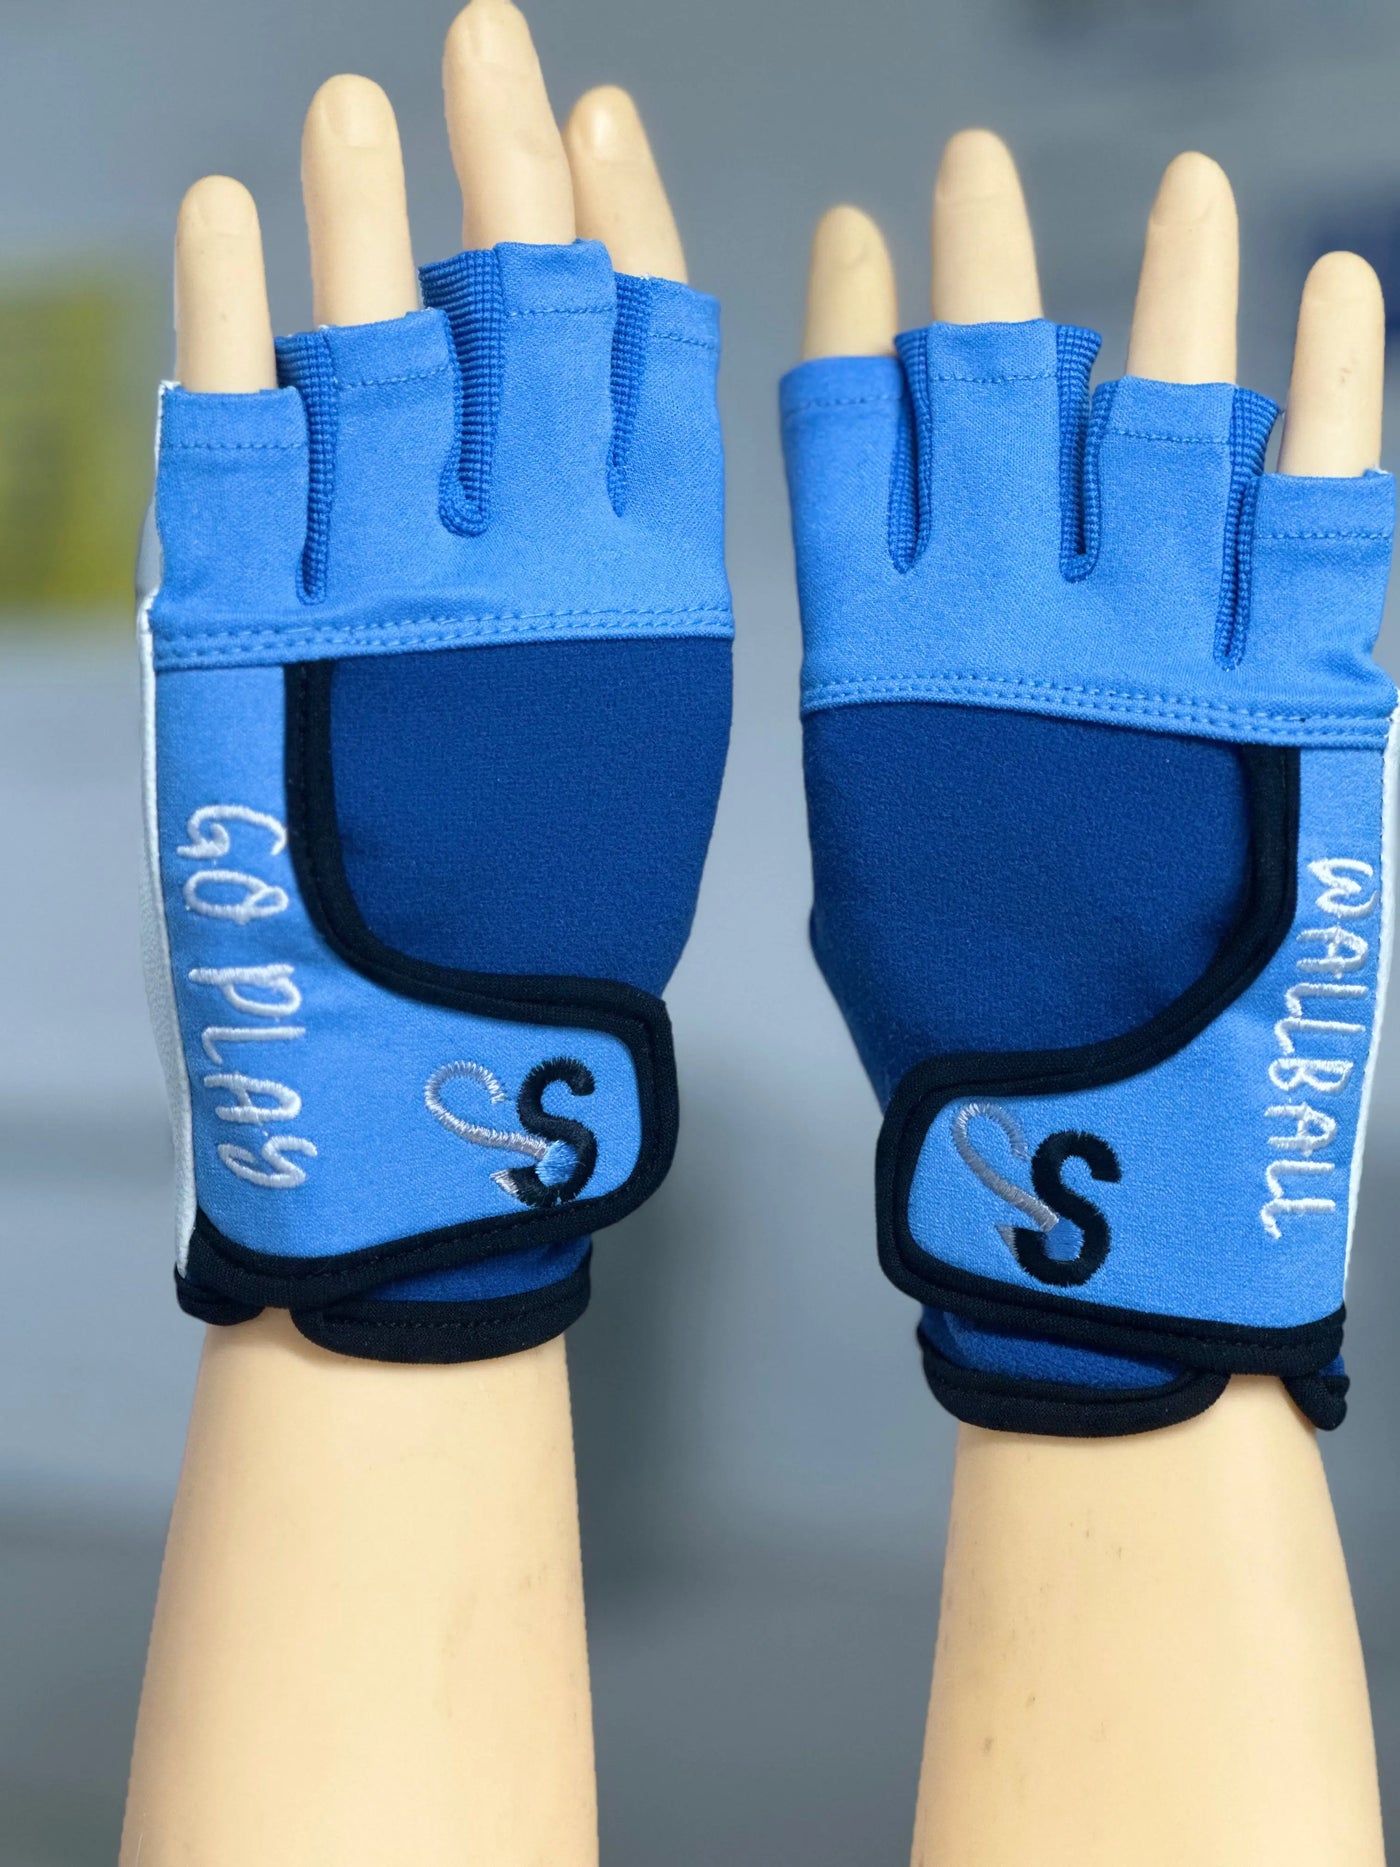 KOTC Pro Gloves Blue Unpadded Palms - Half Fingers New York Handball Store